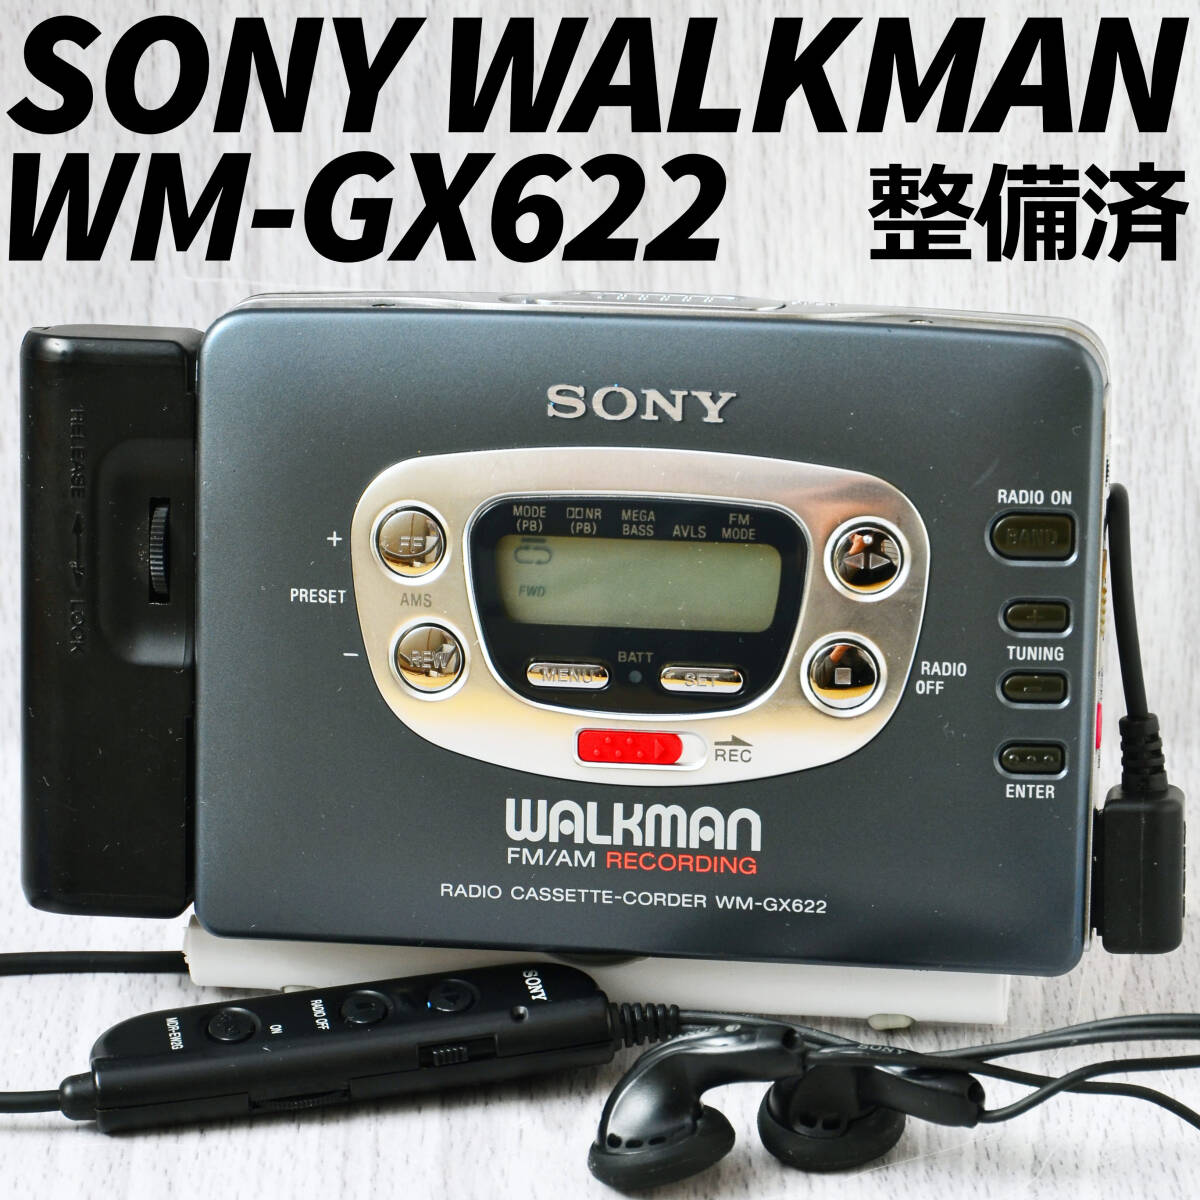 SONY WALKMAN WM-GX622 ラジオ＆レコーディング ソニーカセット